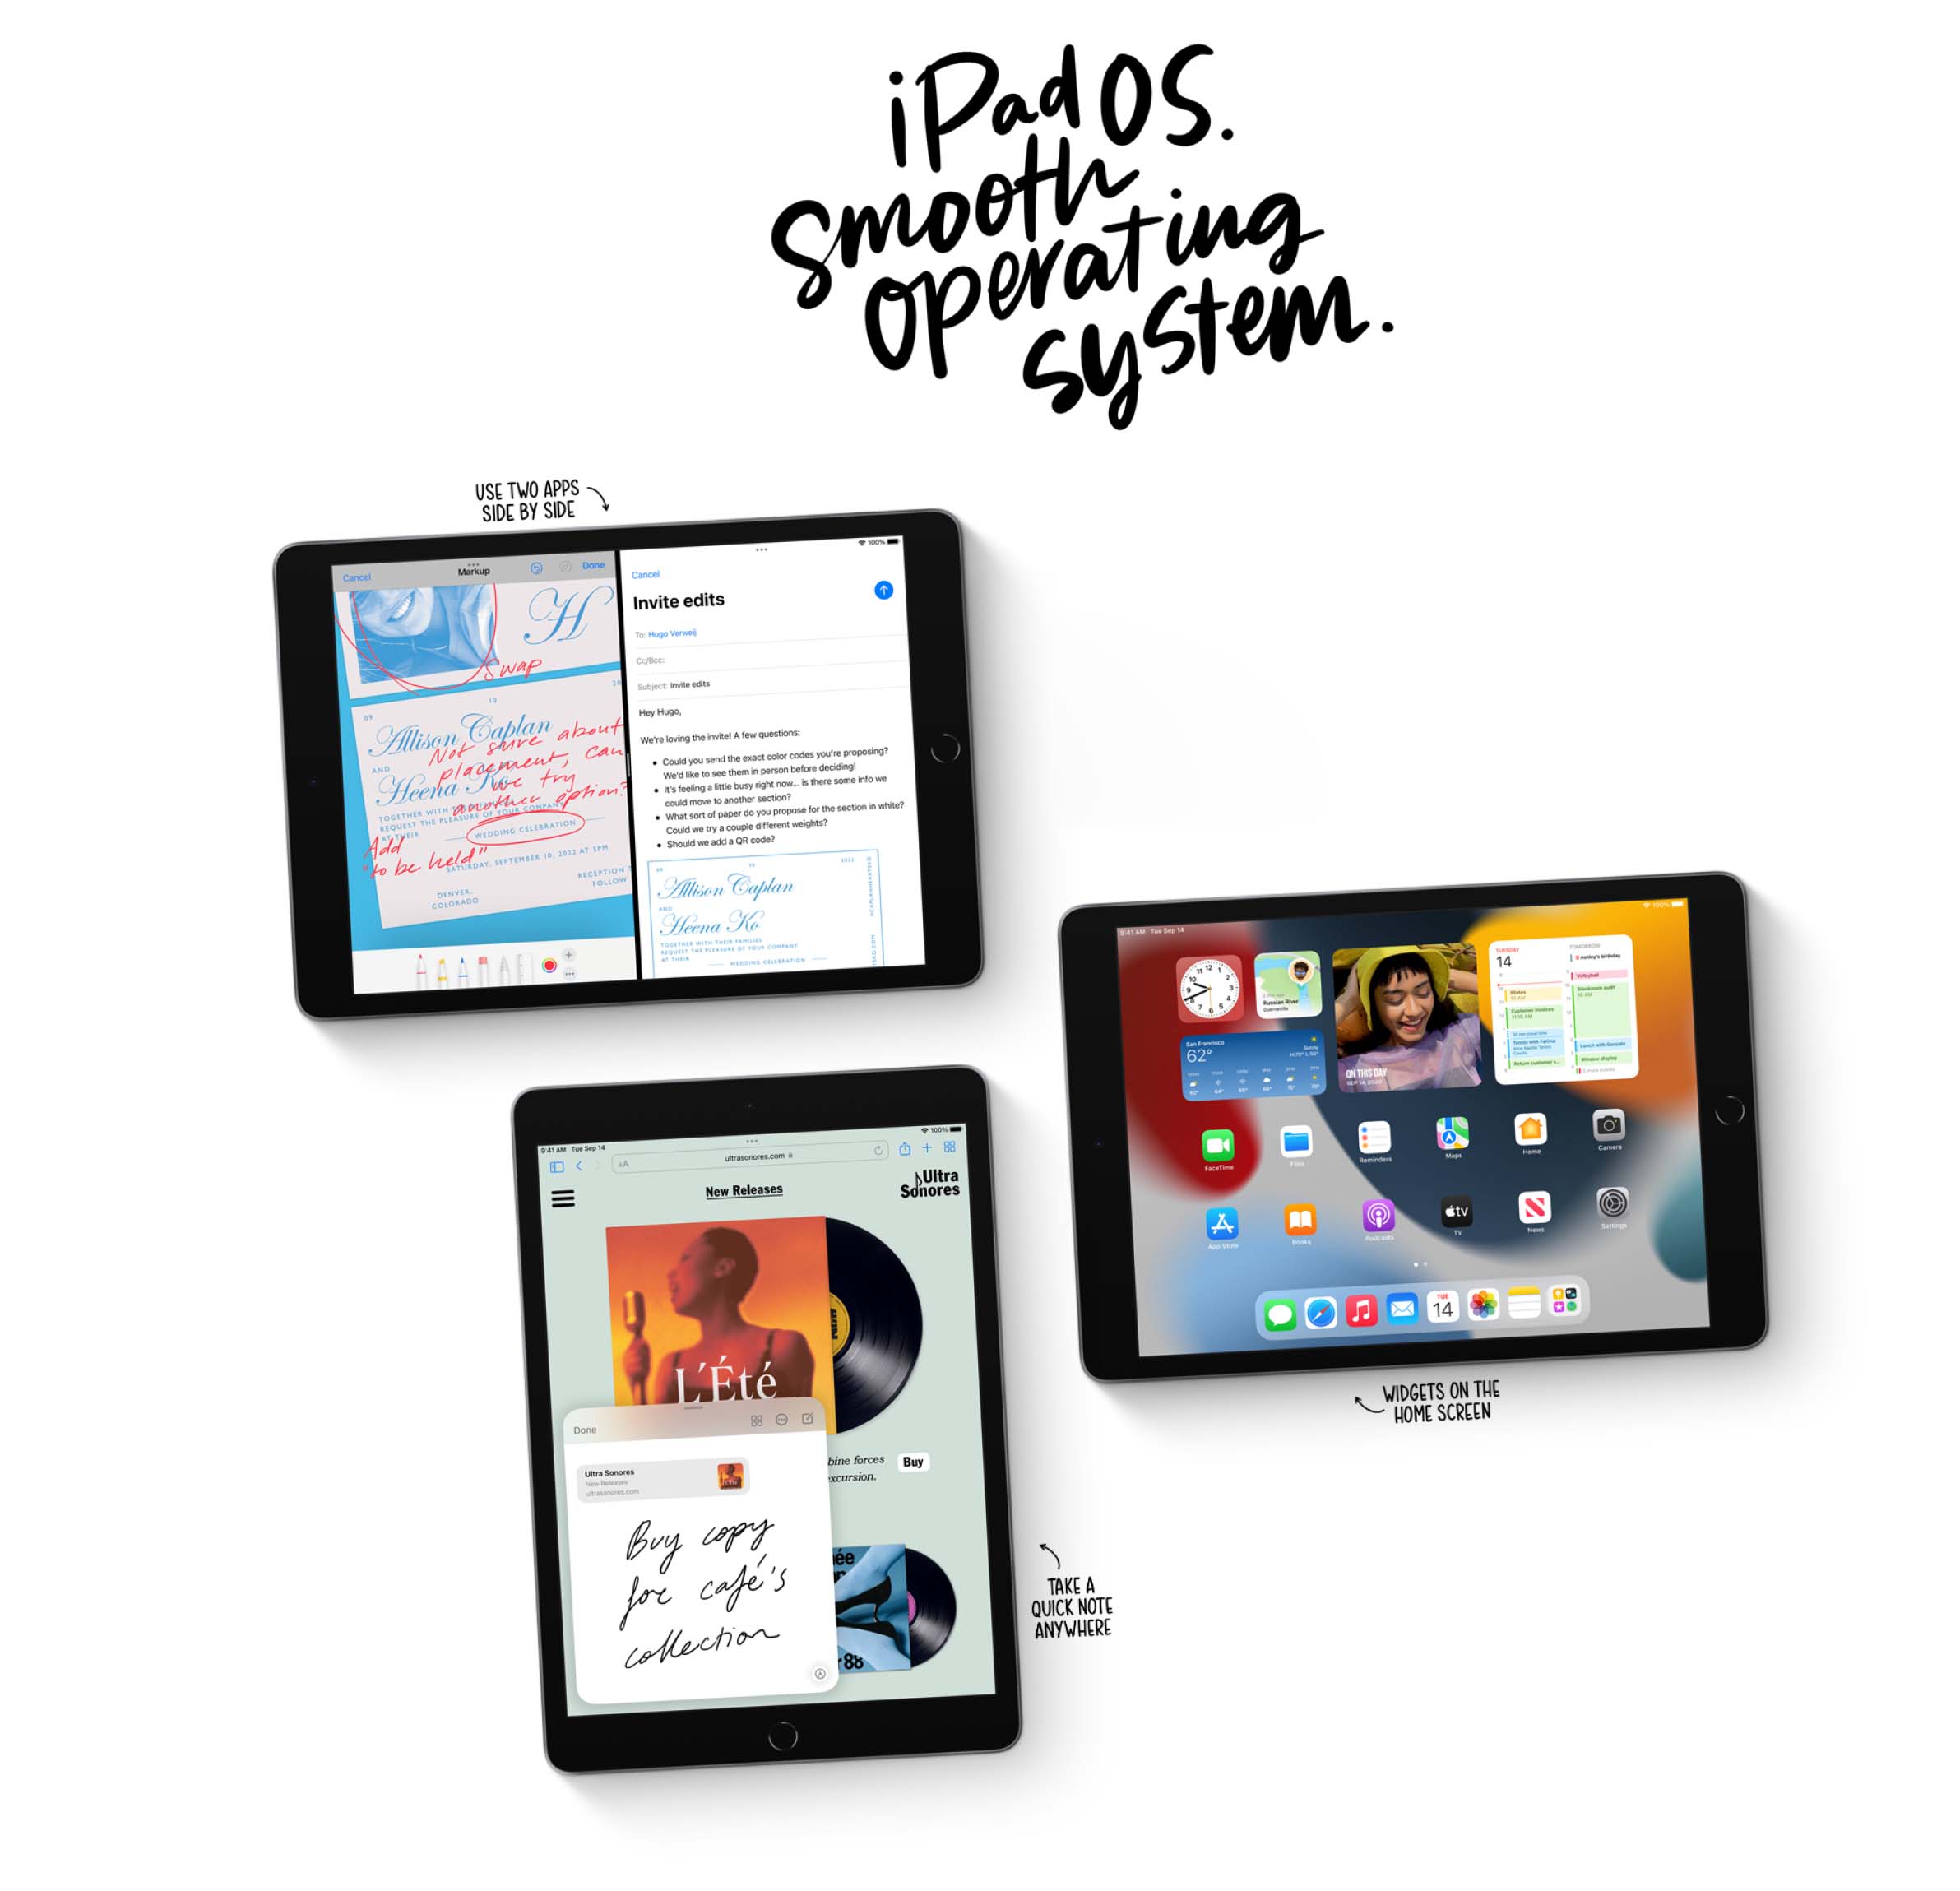 iPad 9th Generation